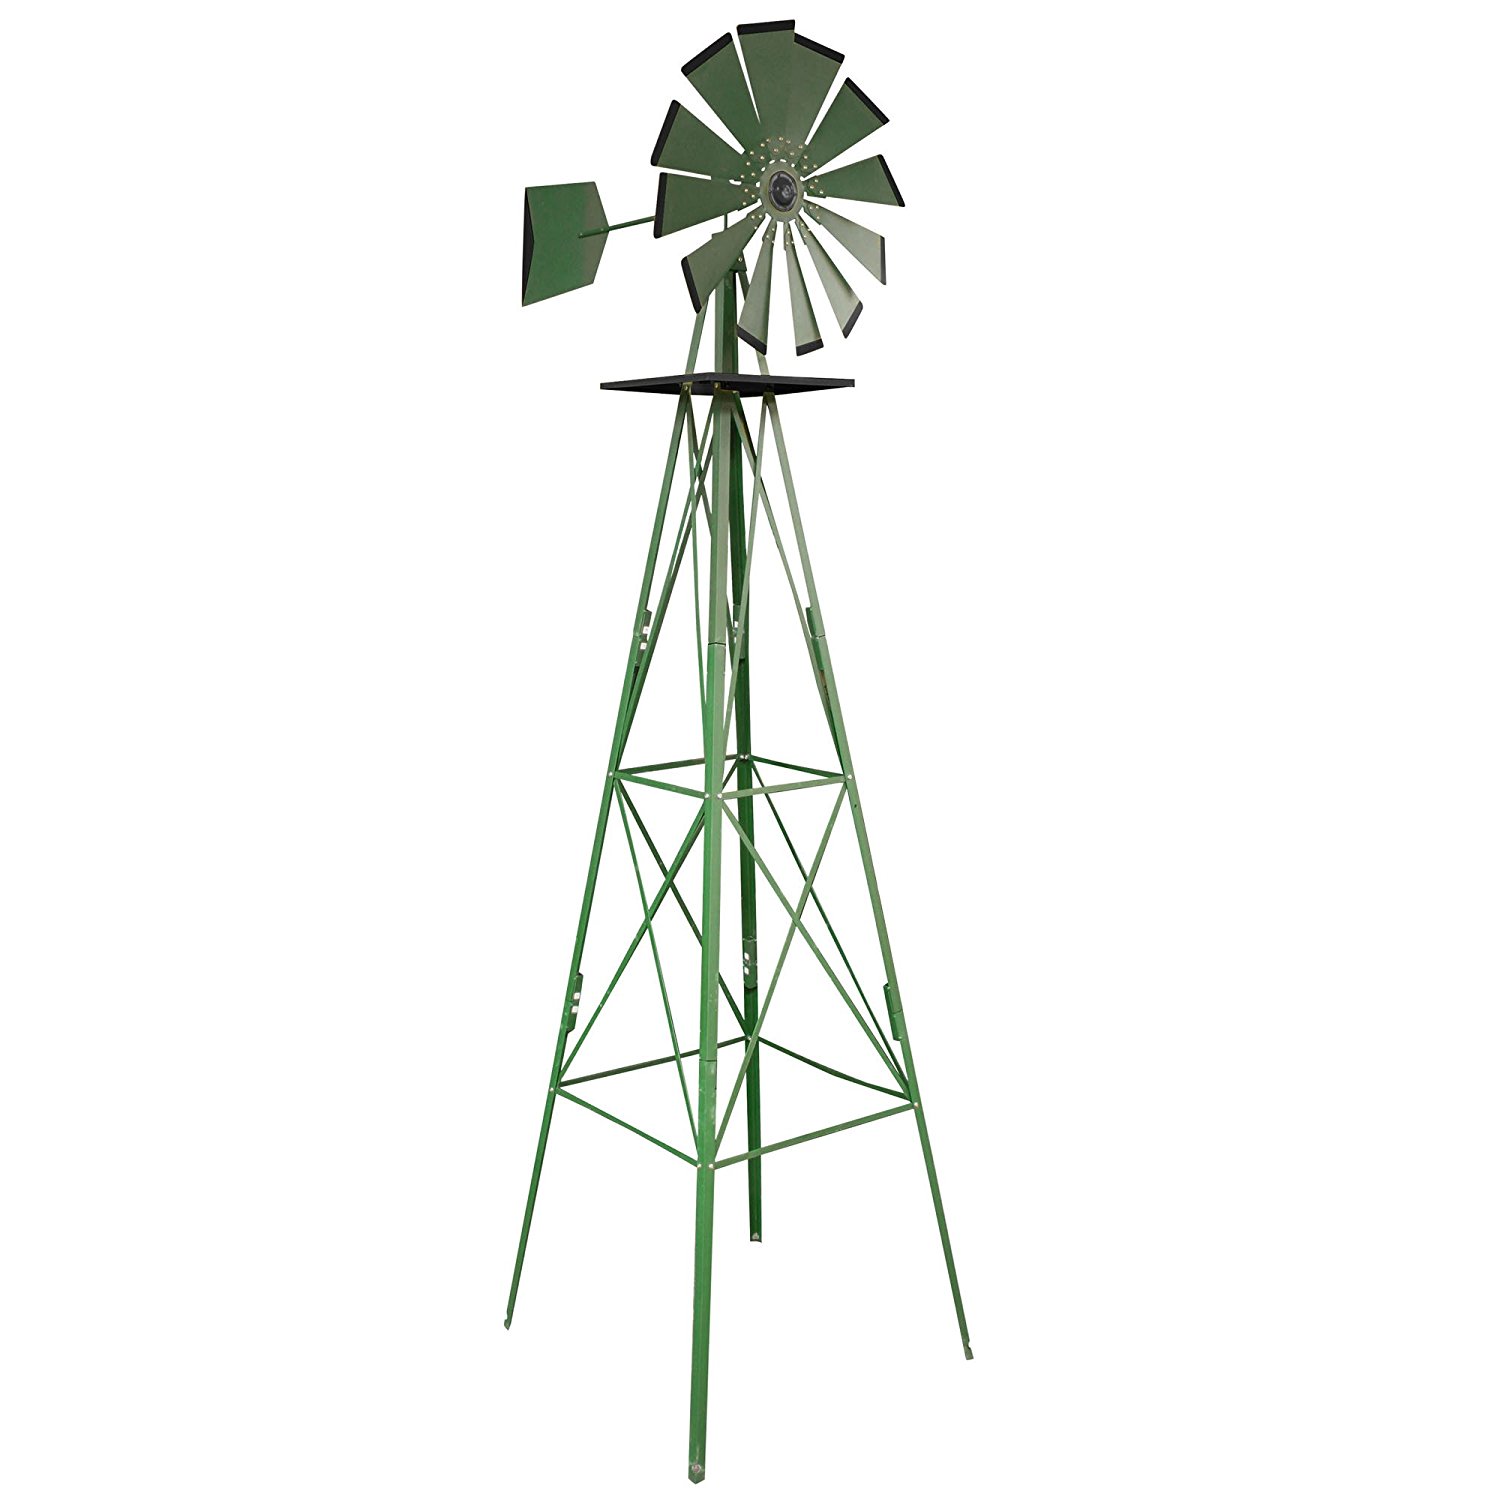 Amazon.com : Sportsman SM07251 8-Feet Windmill : Wind Sculptures ...